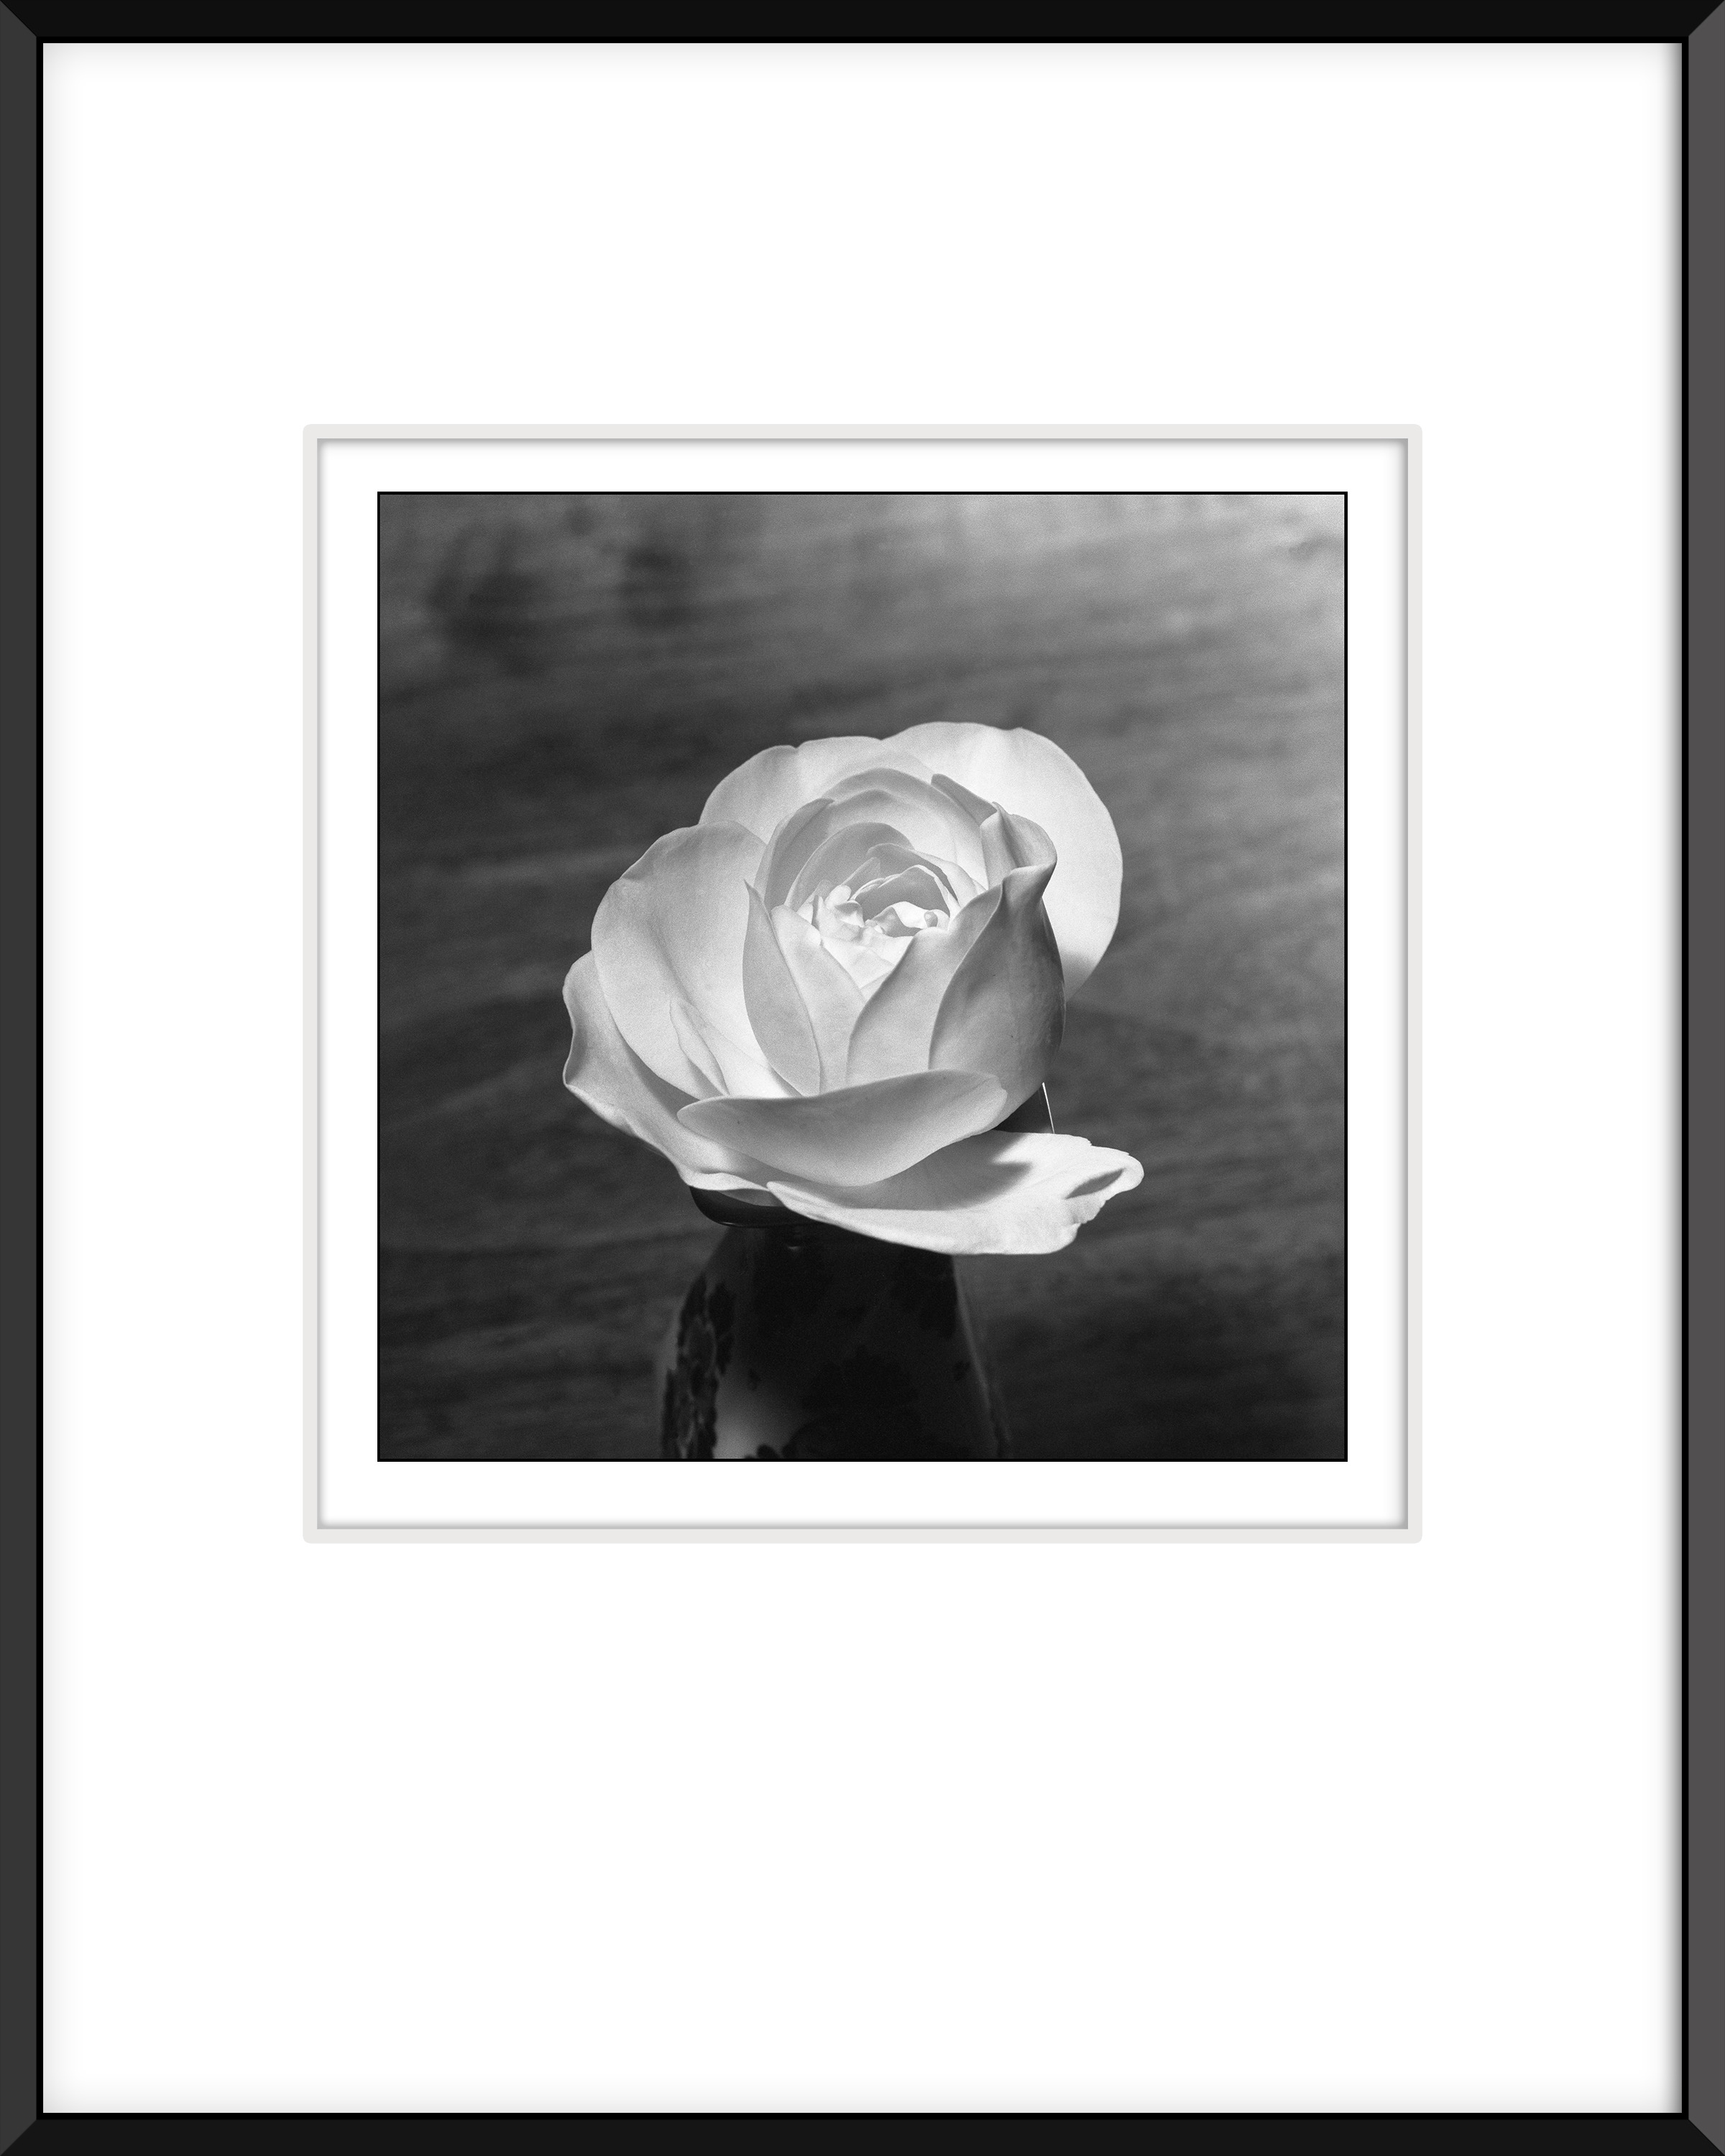 White rose lypew2